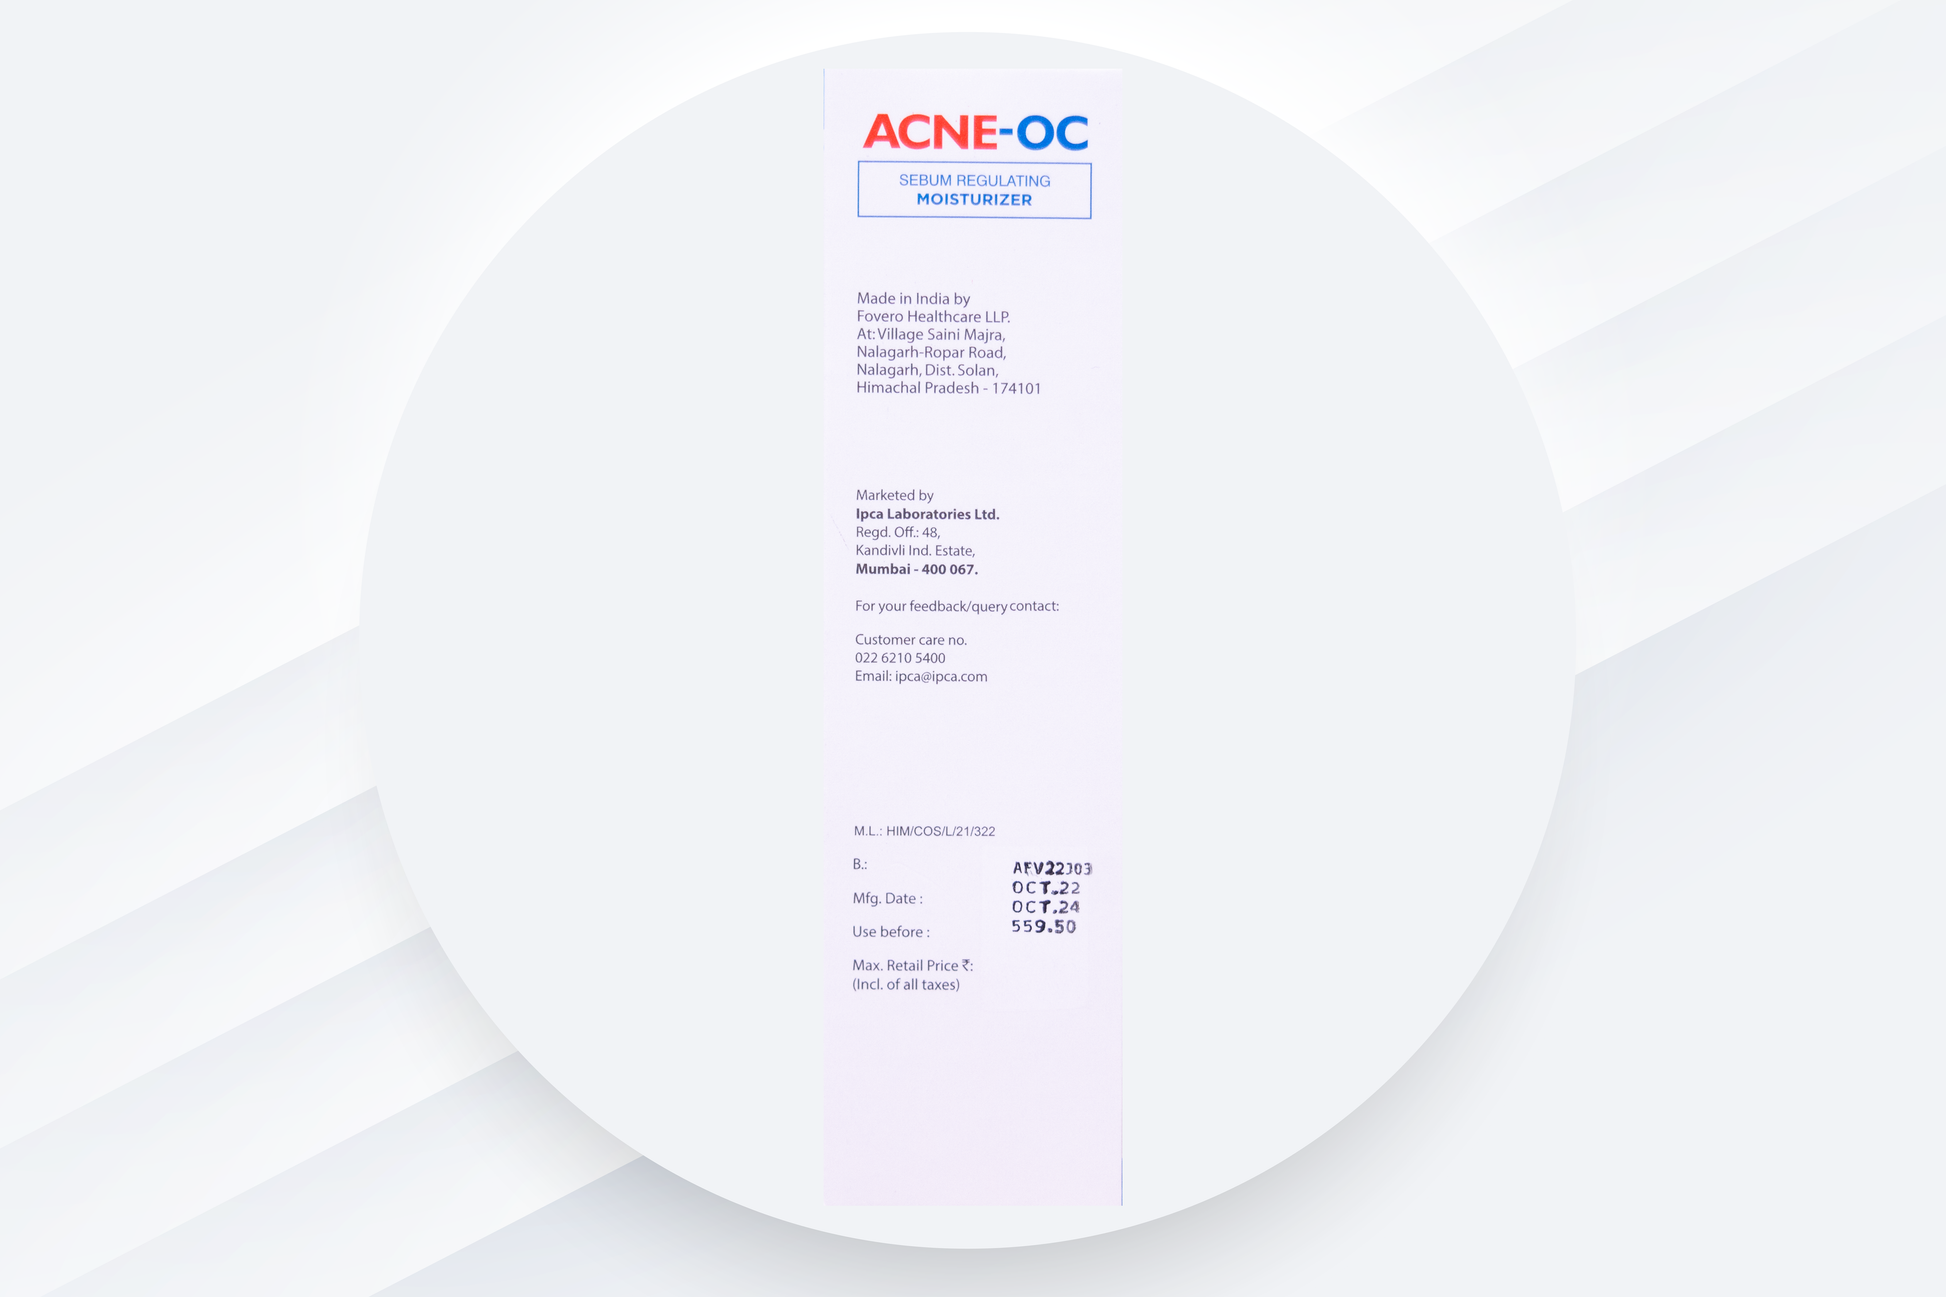 IPCA-Acne-OC-Sebum-Regulating-Moisturizer-clintry